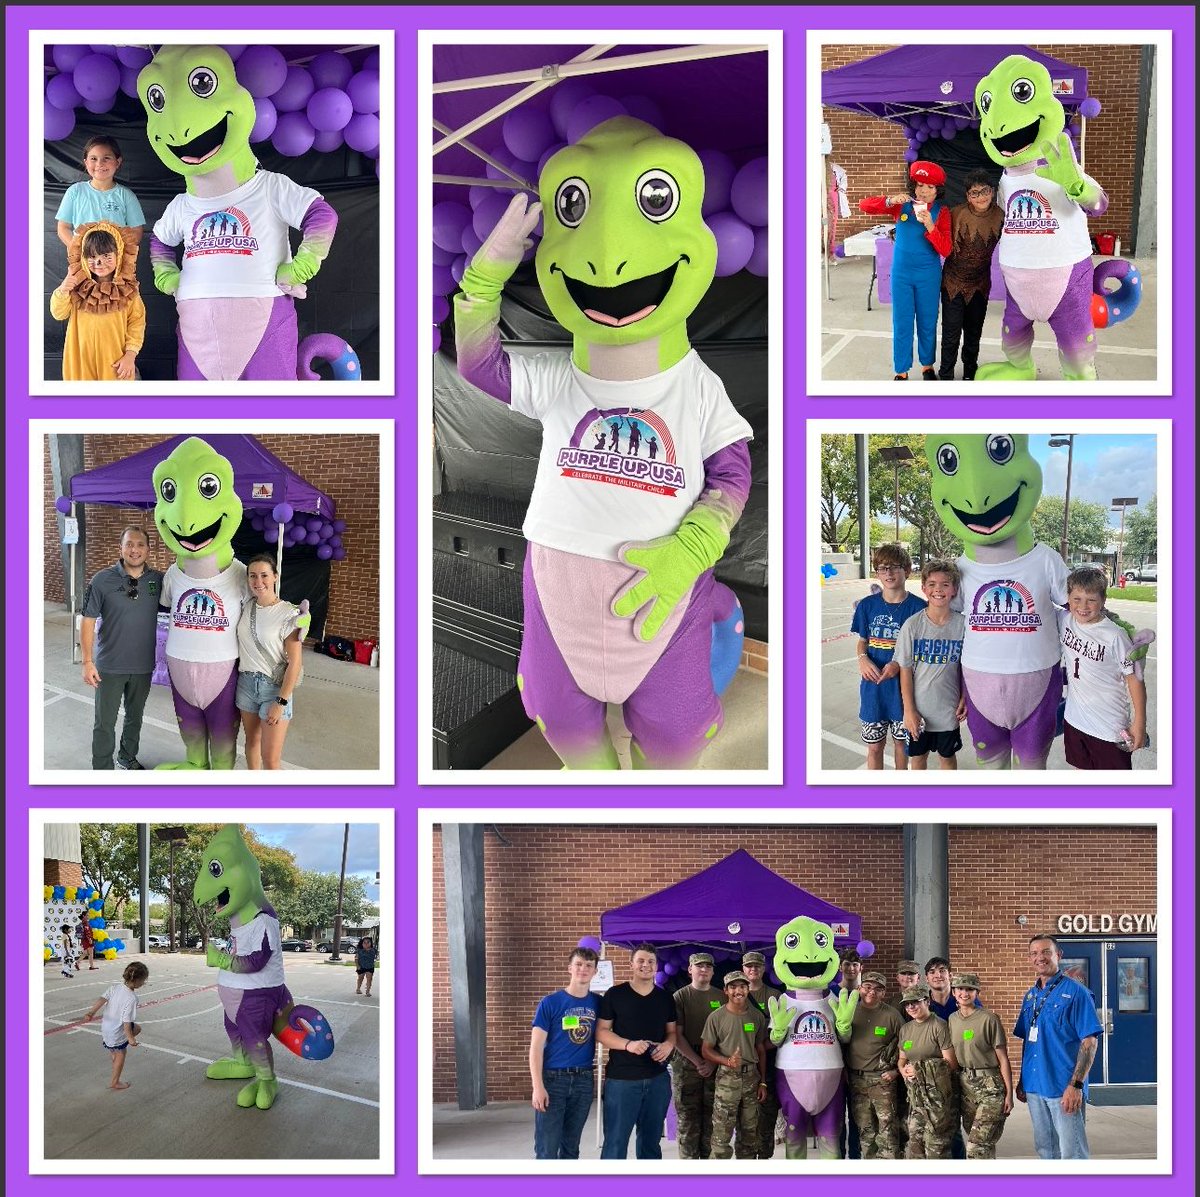 CAMO had fun at Woodridge Elementary School’s Fall Festival! @AHISD @purpleupusa